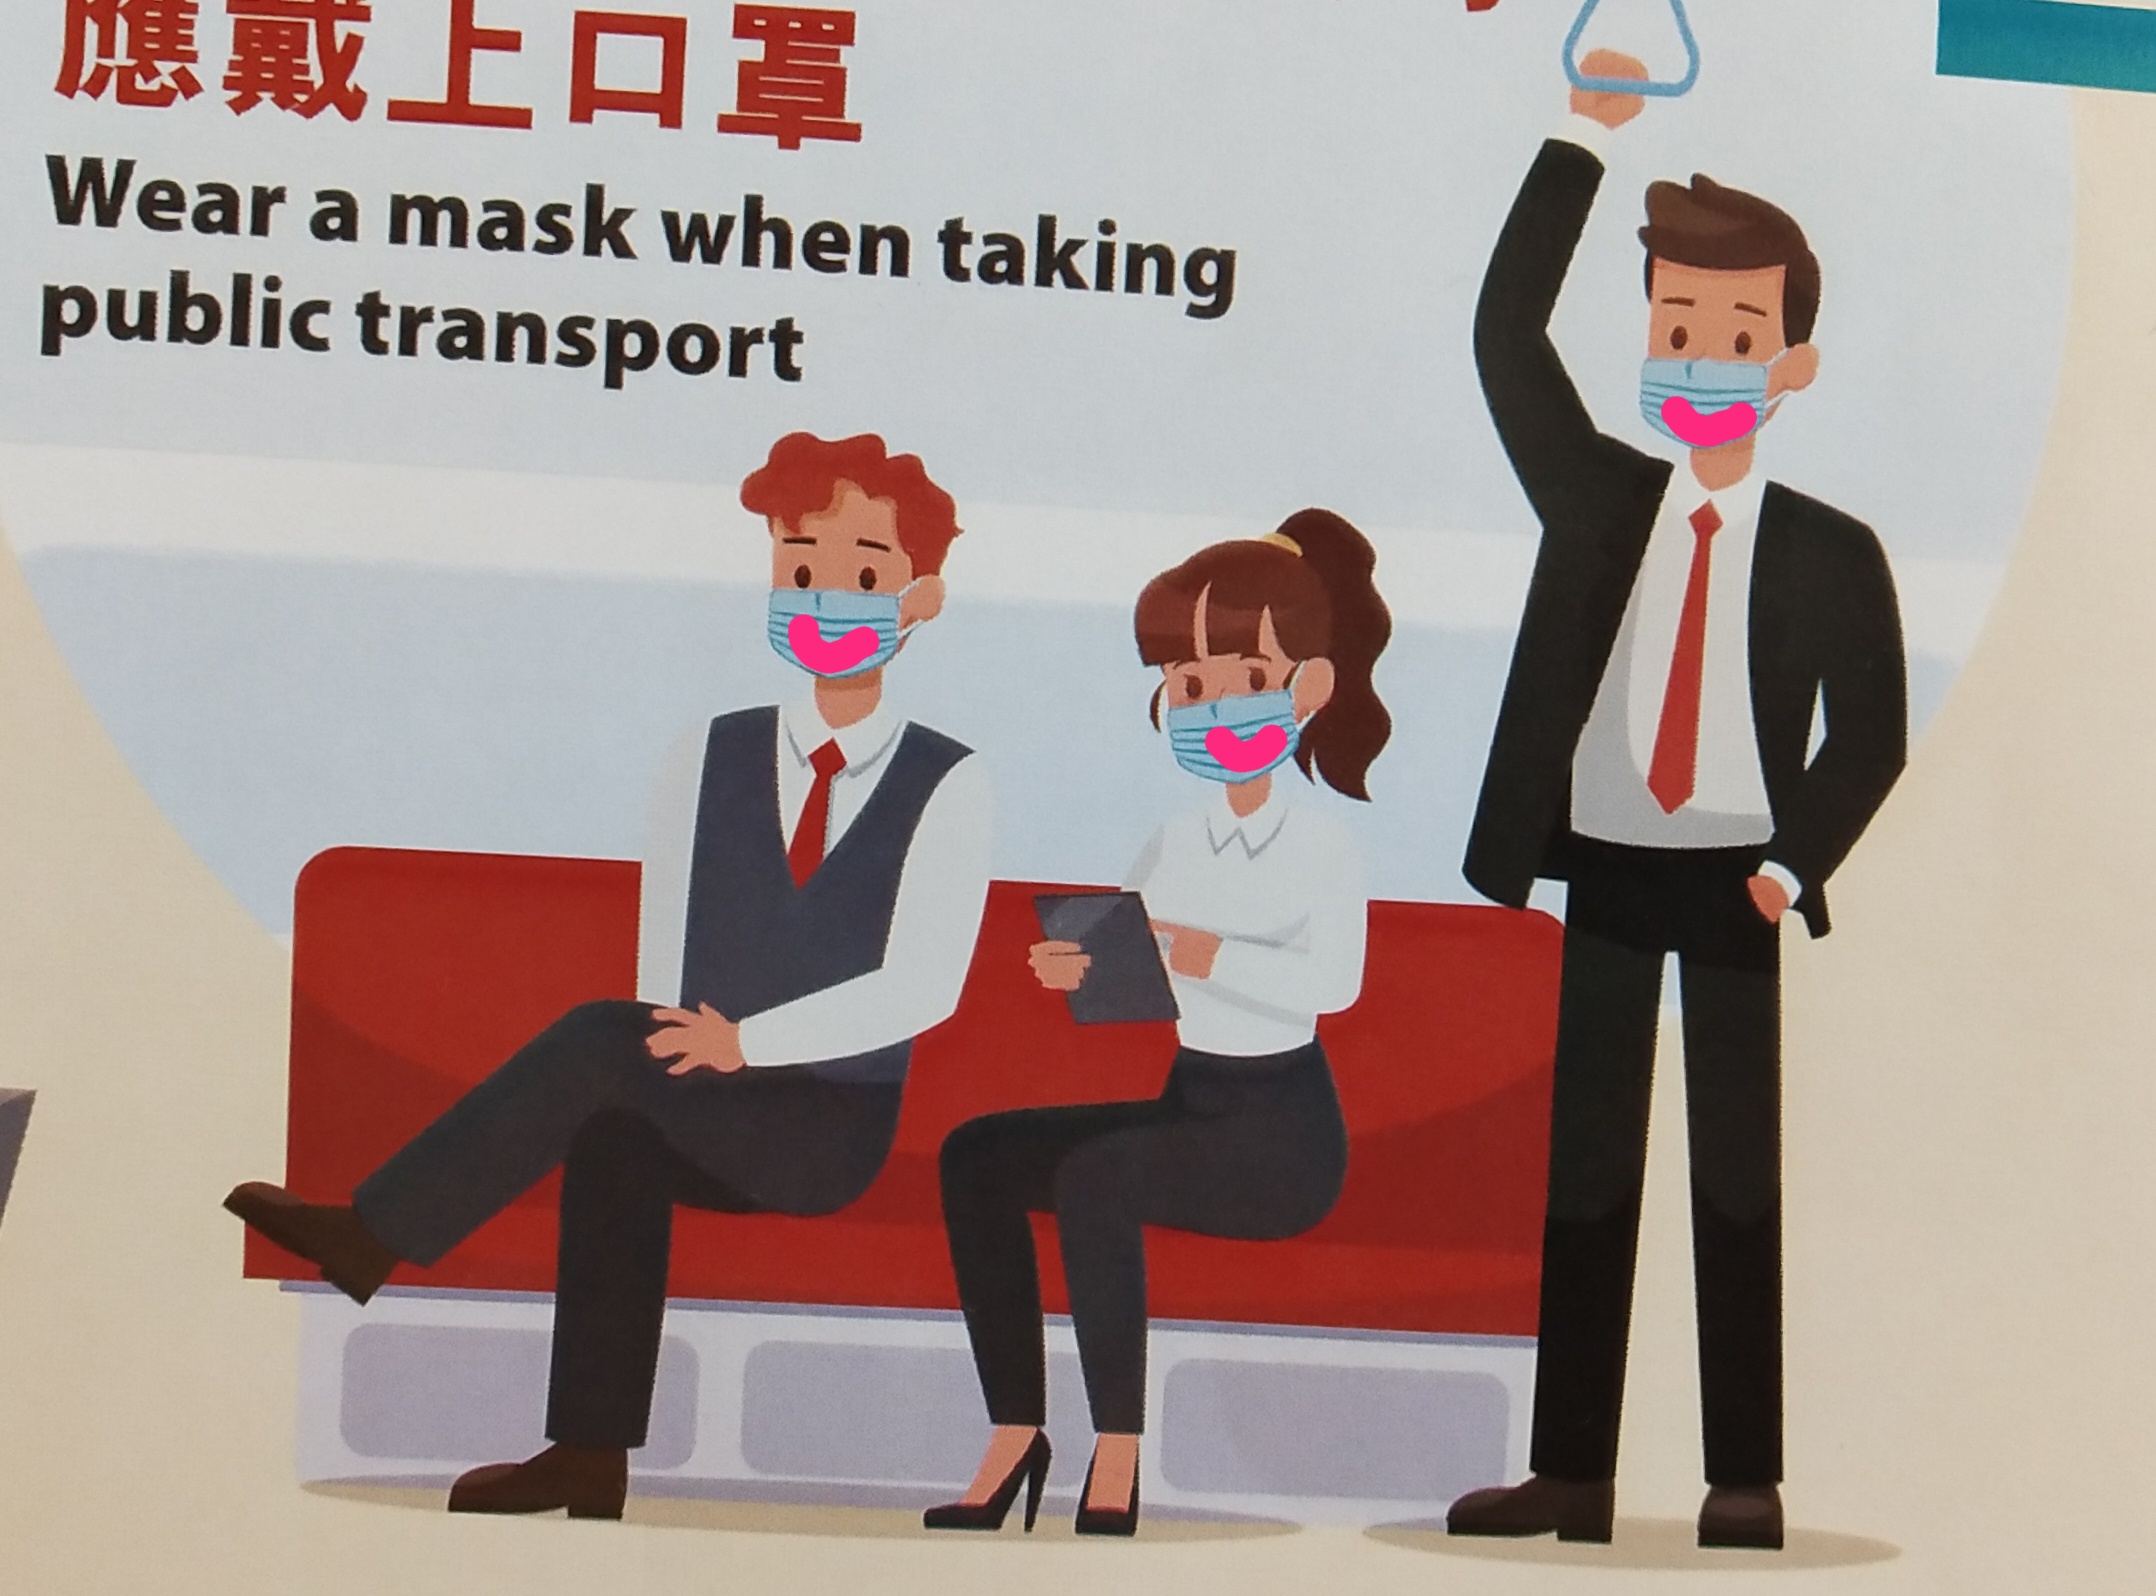 cartoon, passengers sitting, using i-pad, standing all wearing masks